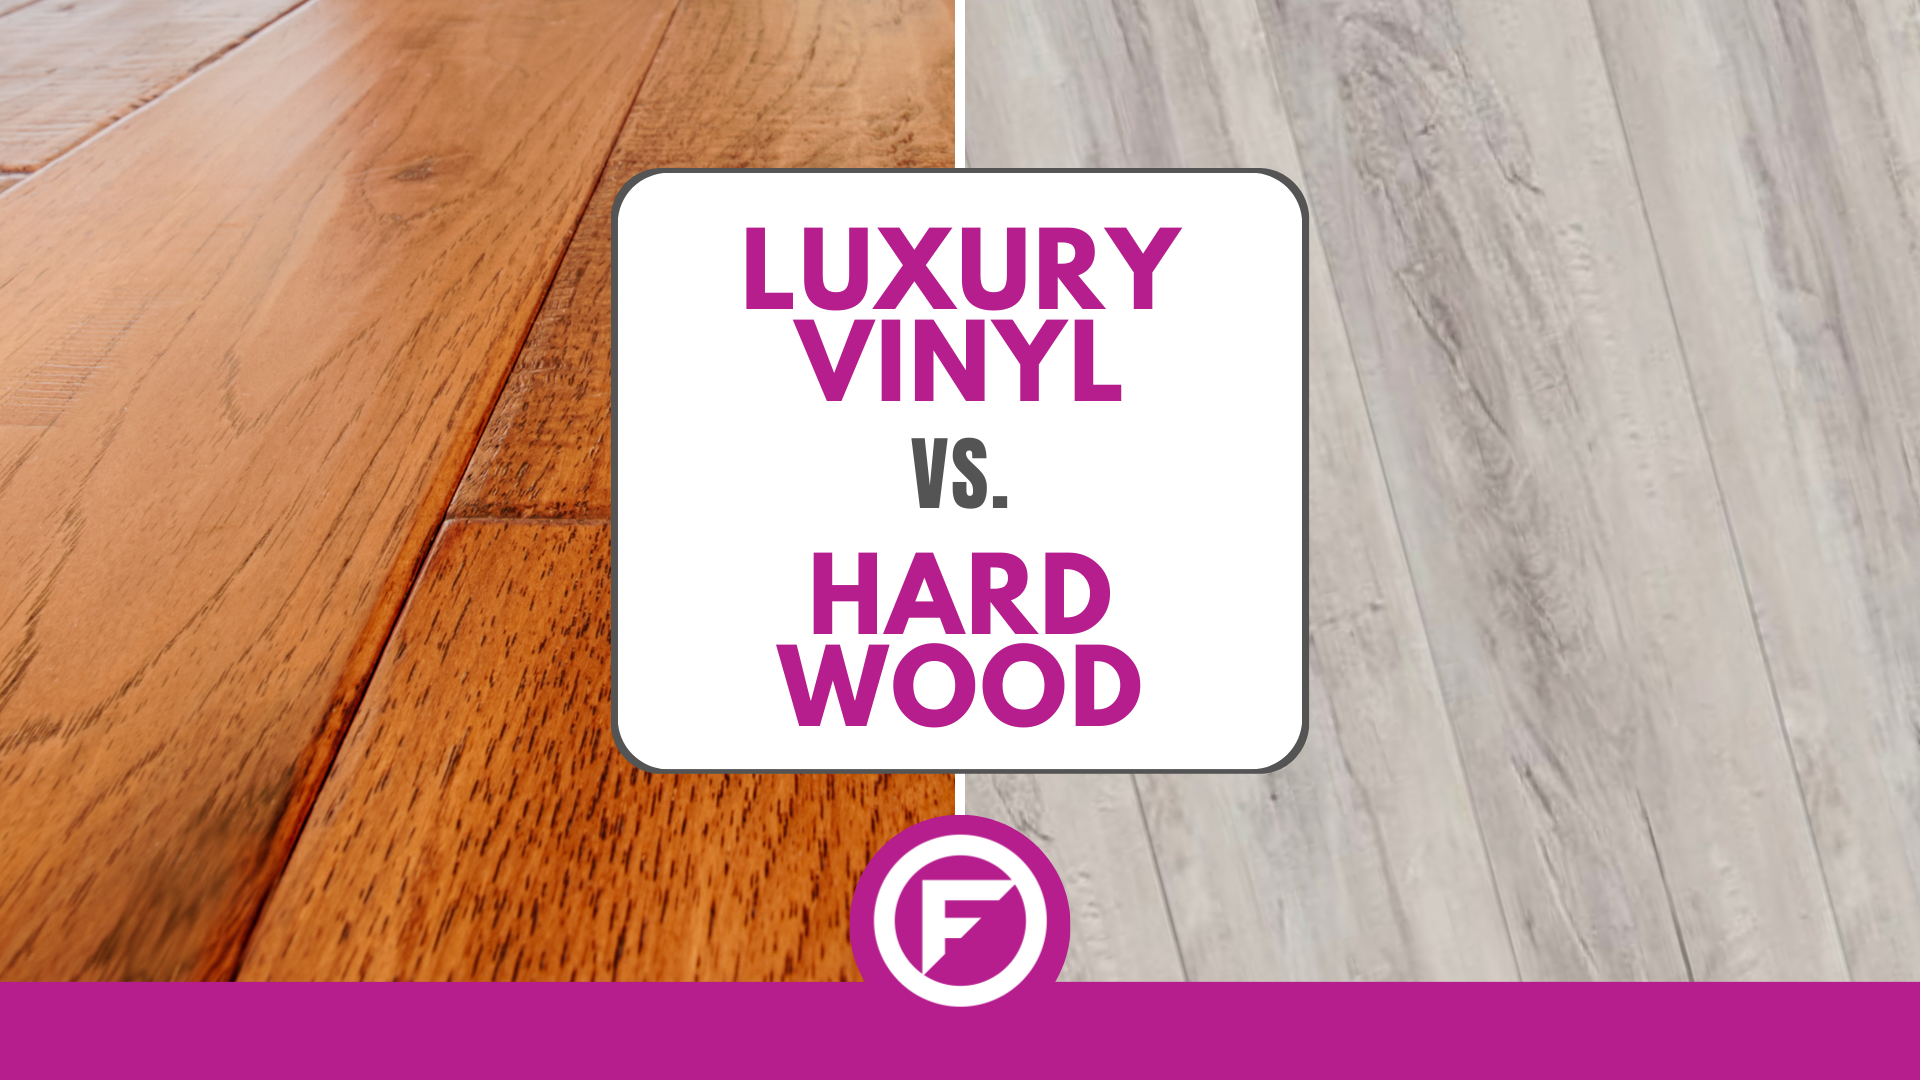 Luxury Vinyl Plank Flooring - LVP Floors